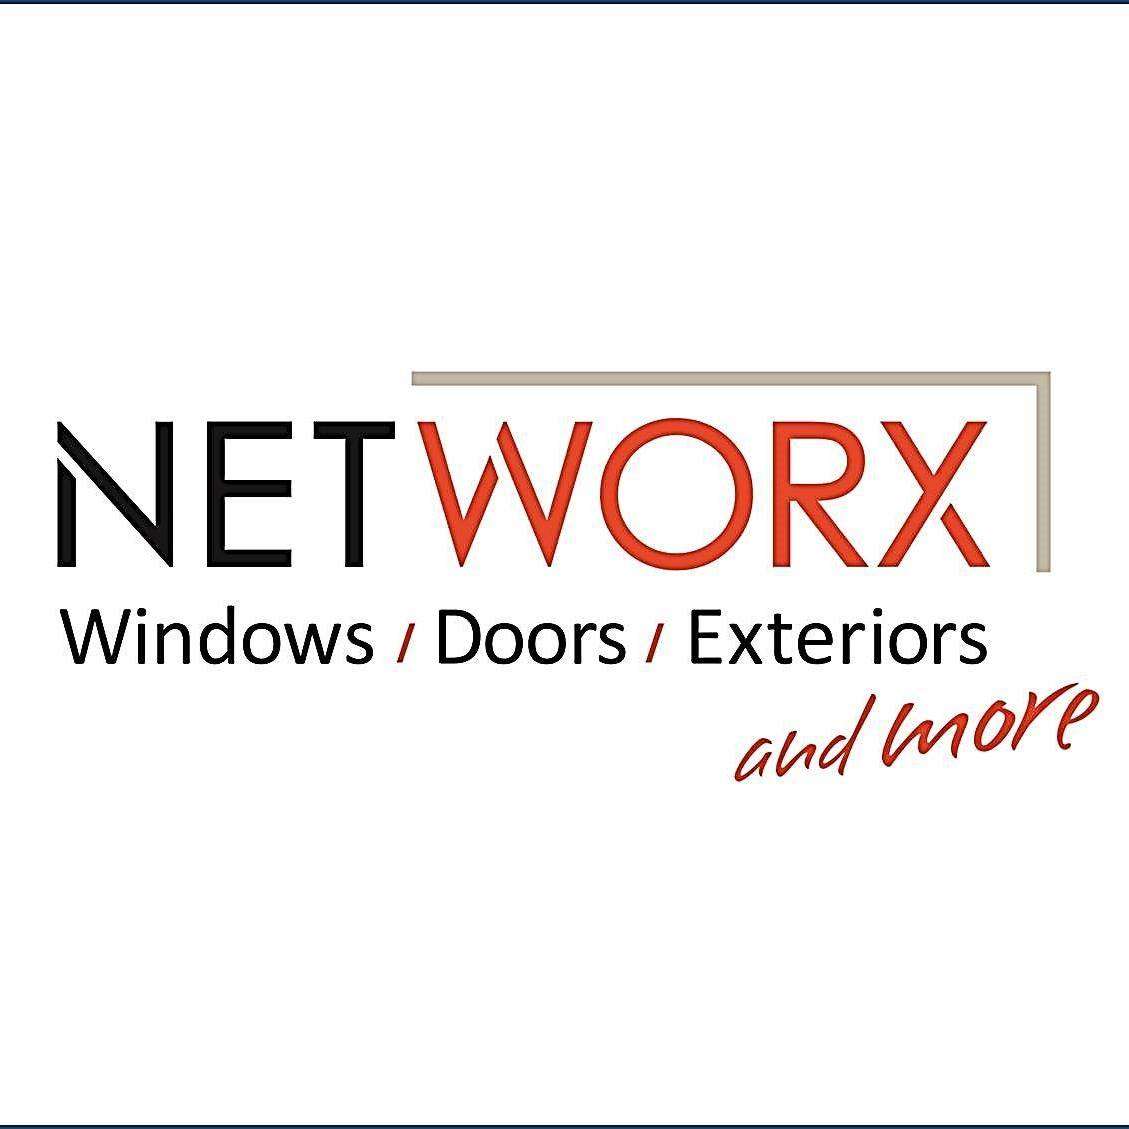 networx systems marketing